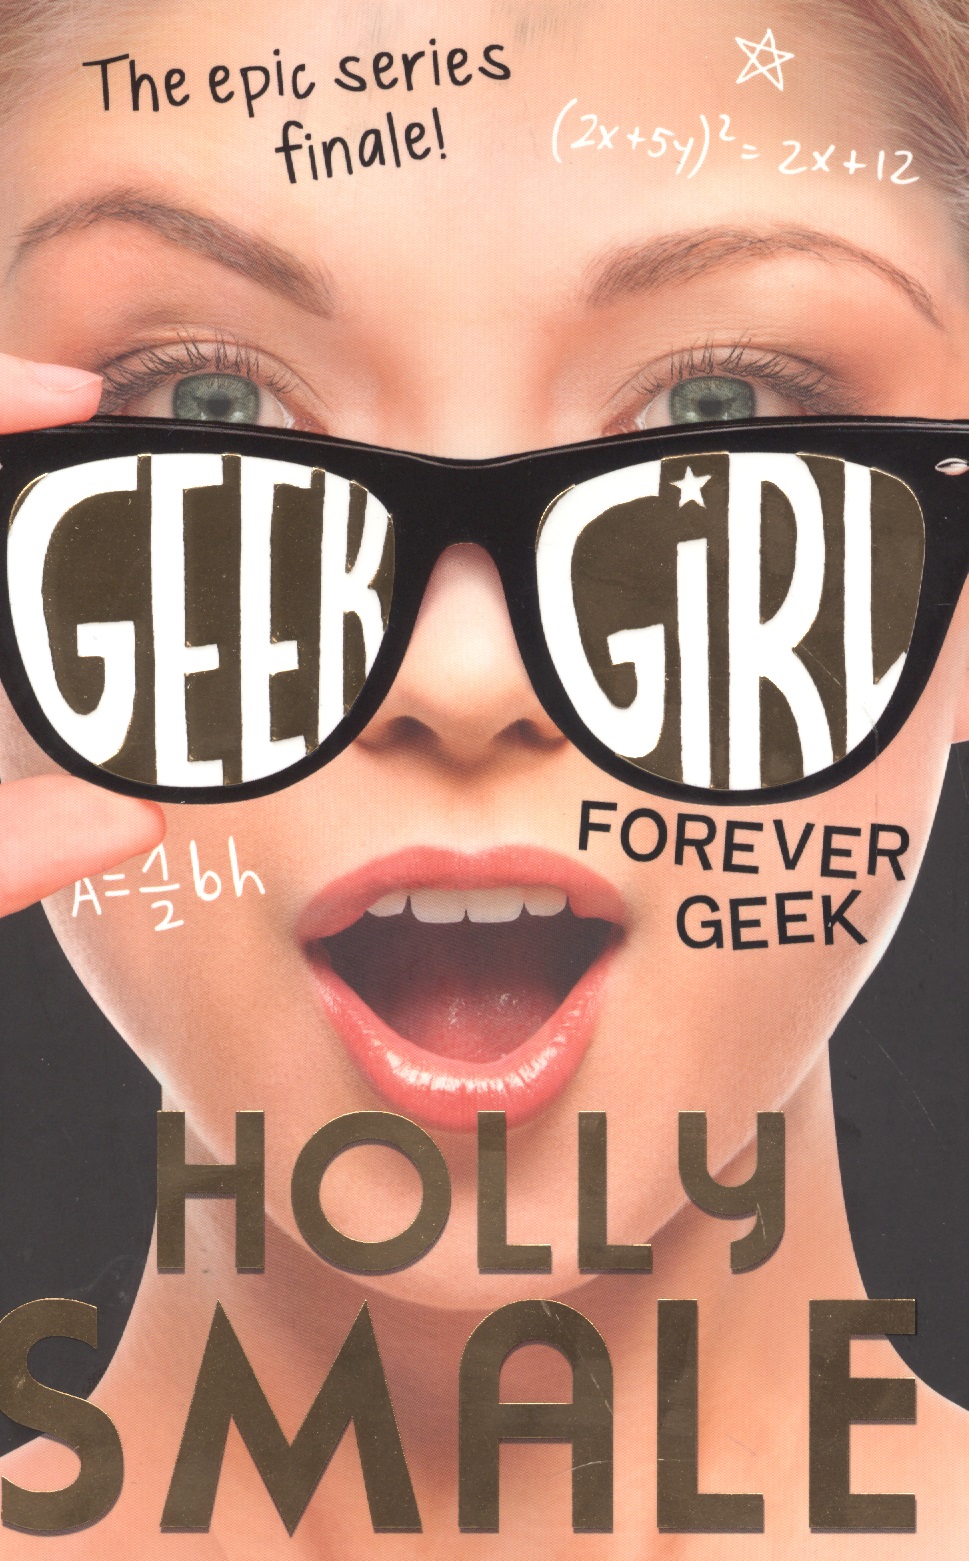 Smale Holly Forever Geek (Geek Girl, Book 6) (м) Smale smale holly forever geek